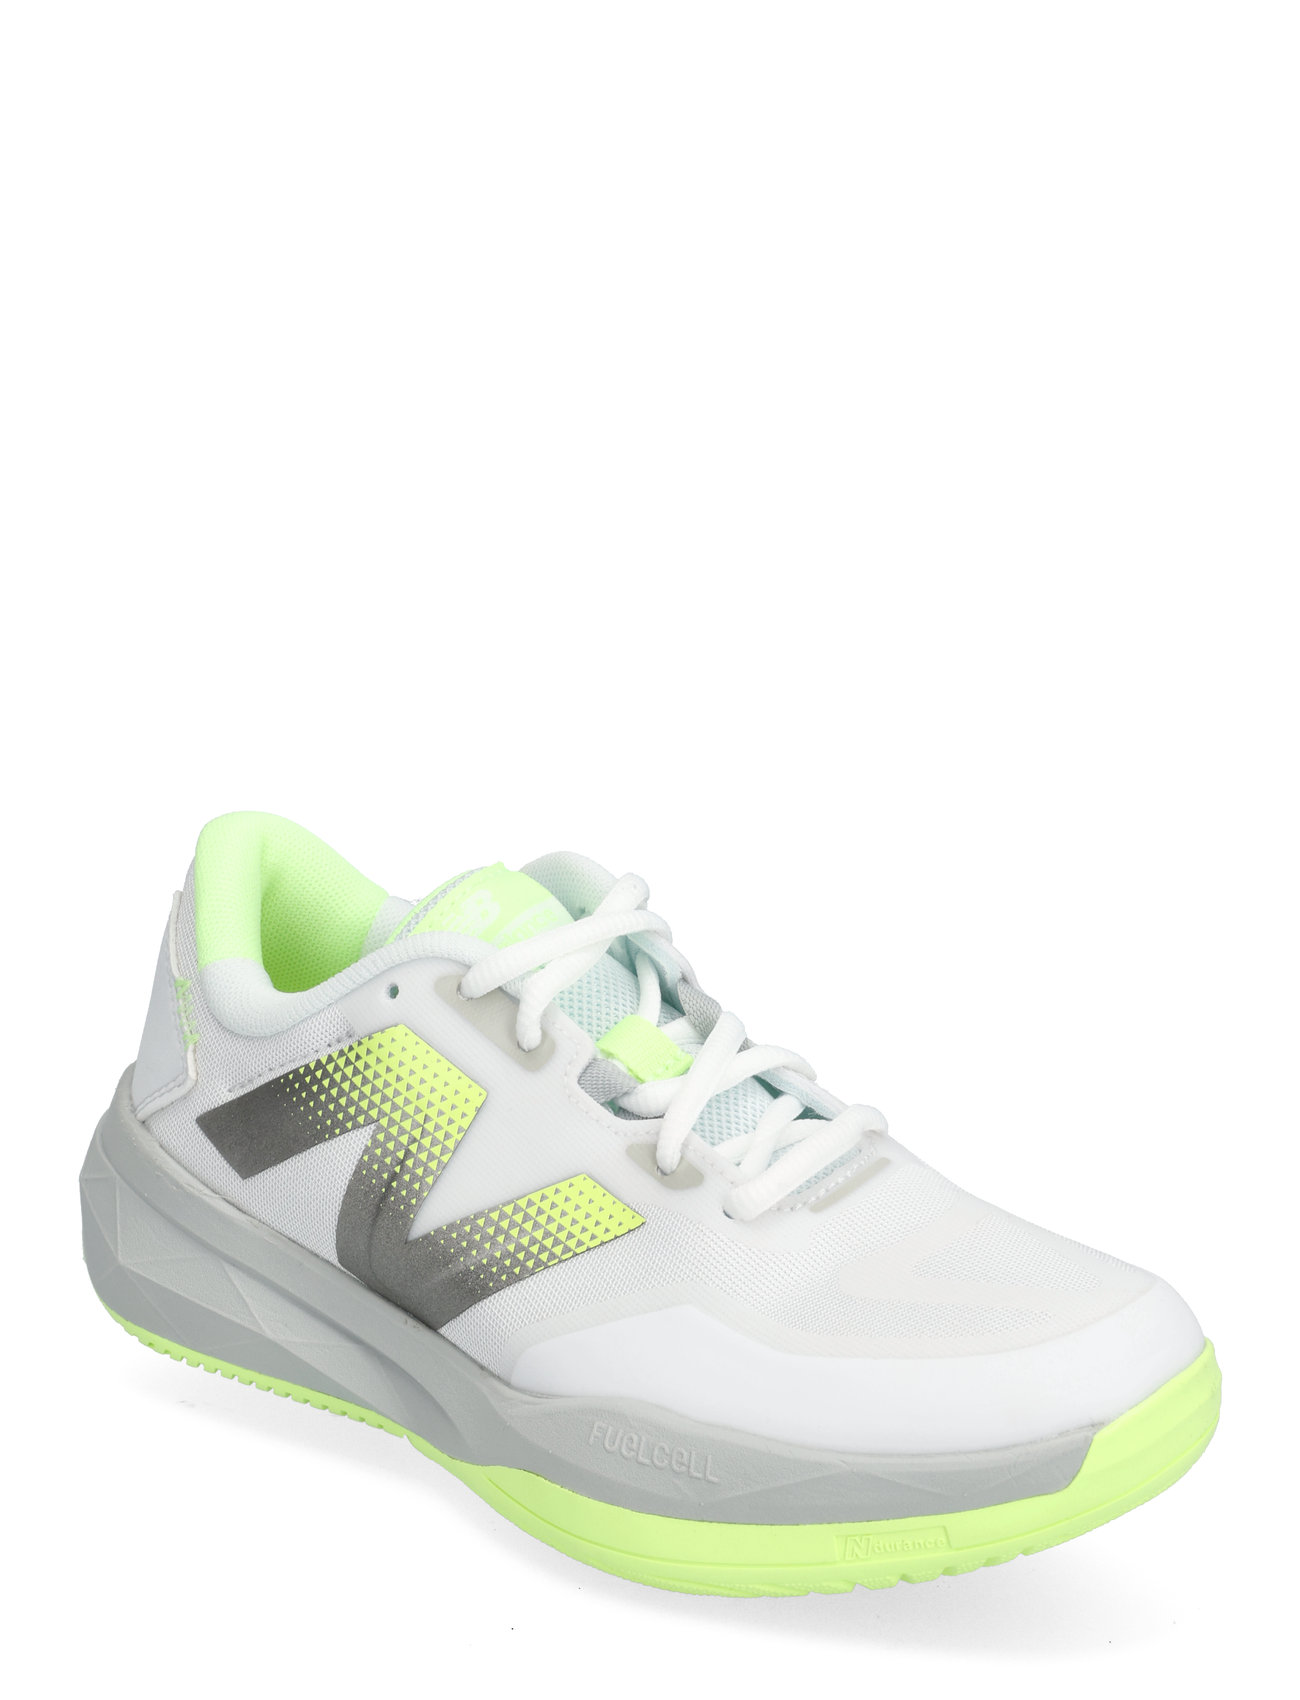 New Balance Padel 796V4 Sport Sport Shoes Racketsports Shoes Tennis Shoes White New Balance